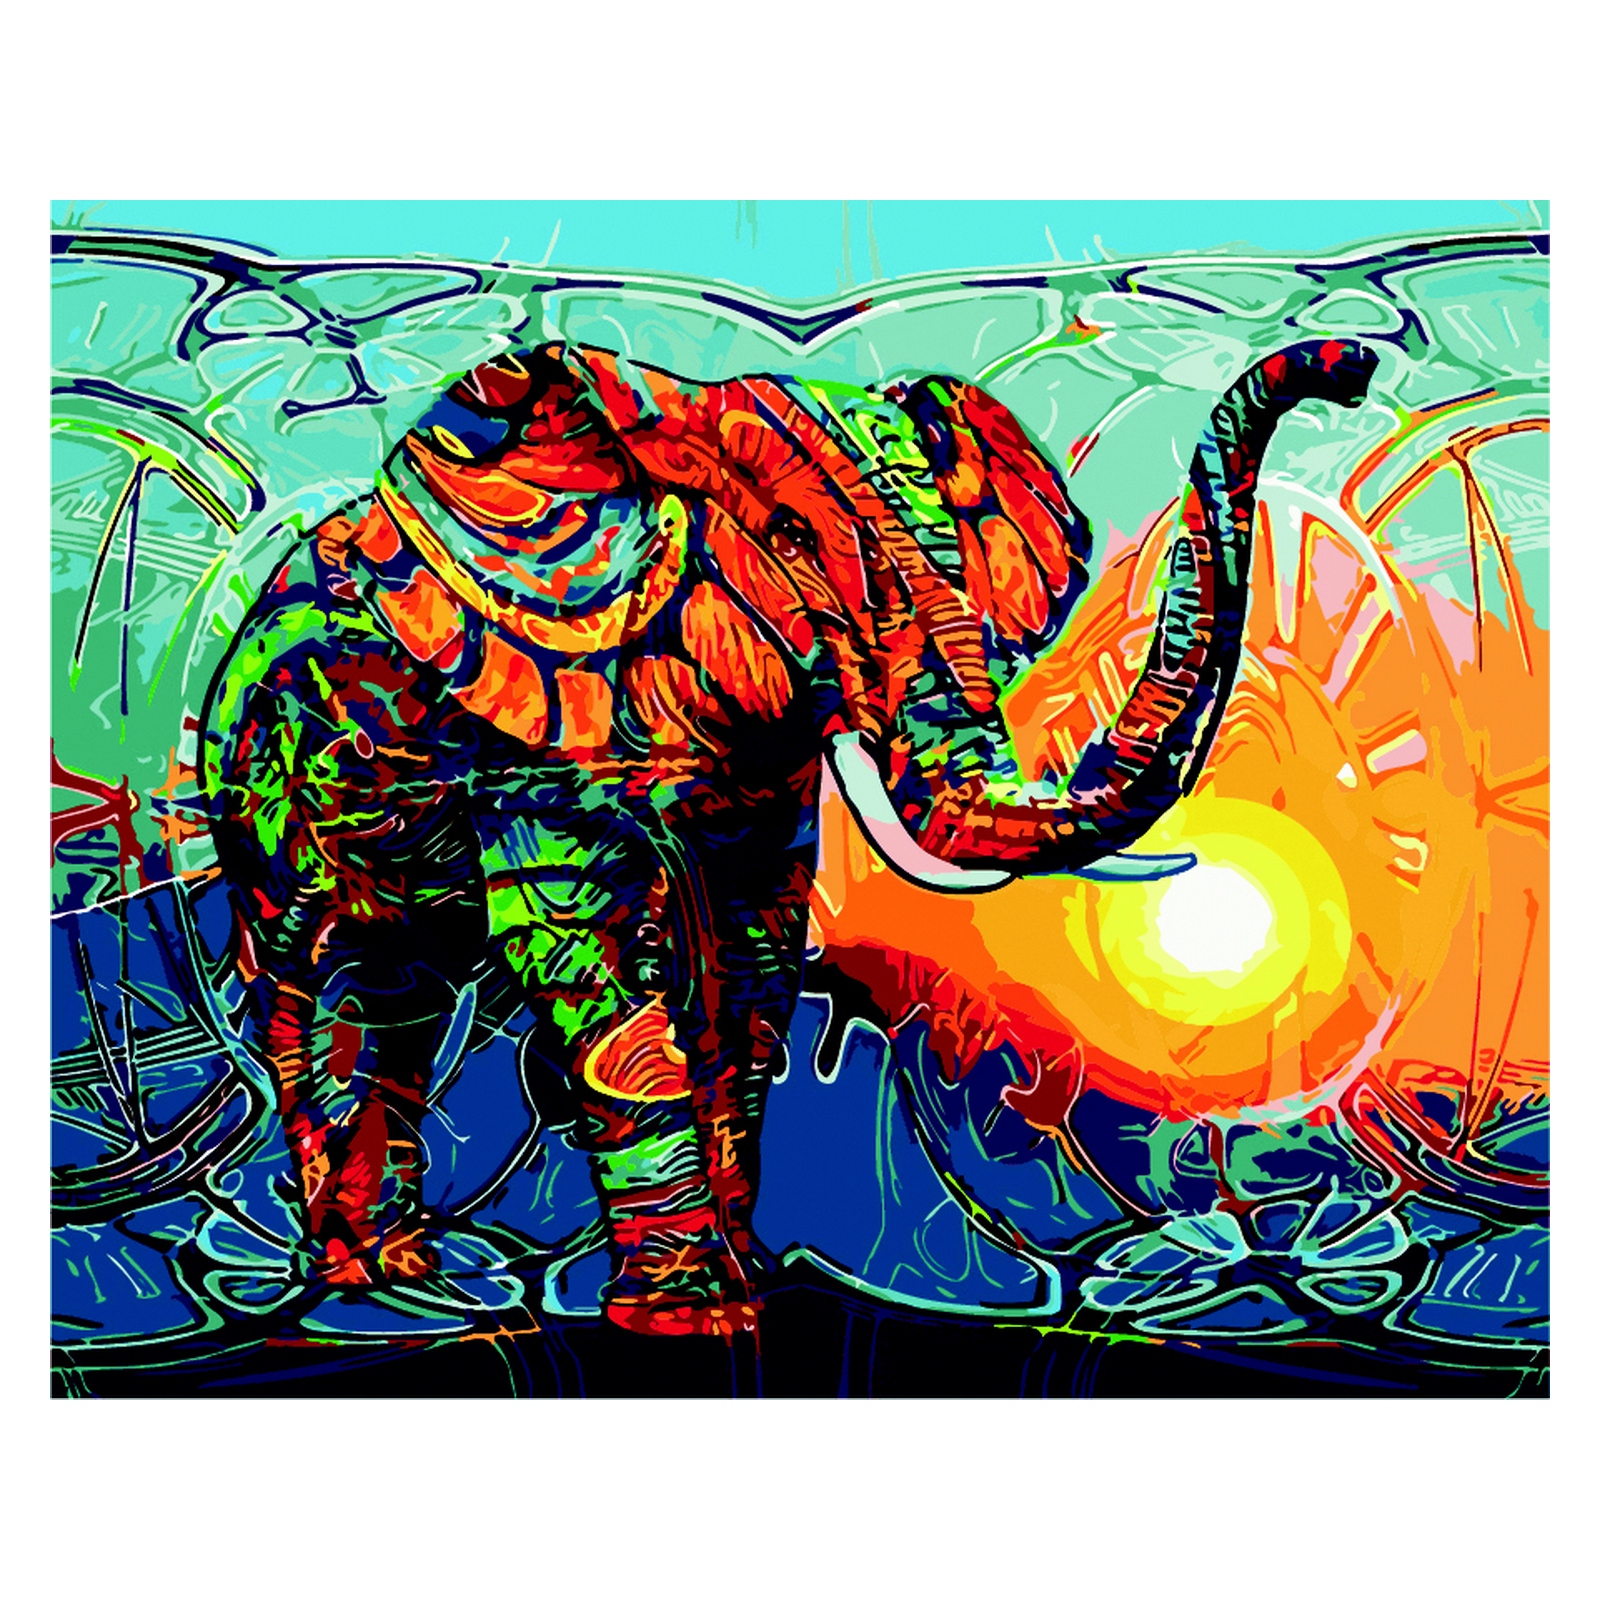 Картина по номерам ZiBi Индийский слон 40*50 см ART Line (ZB.64250)